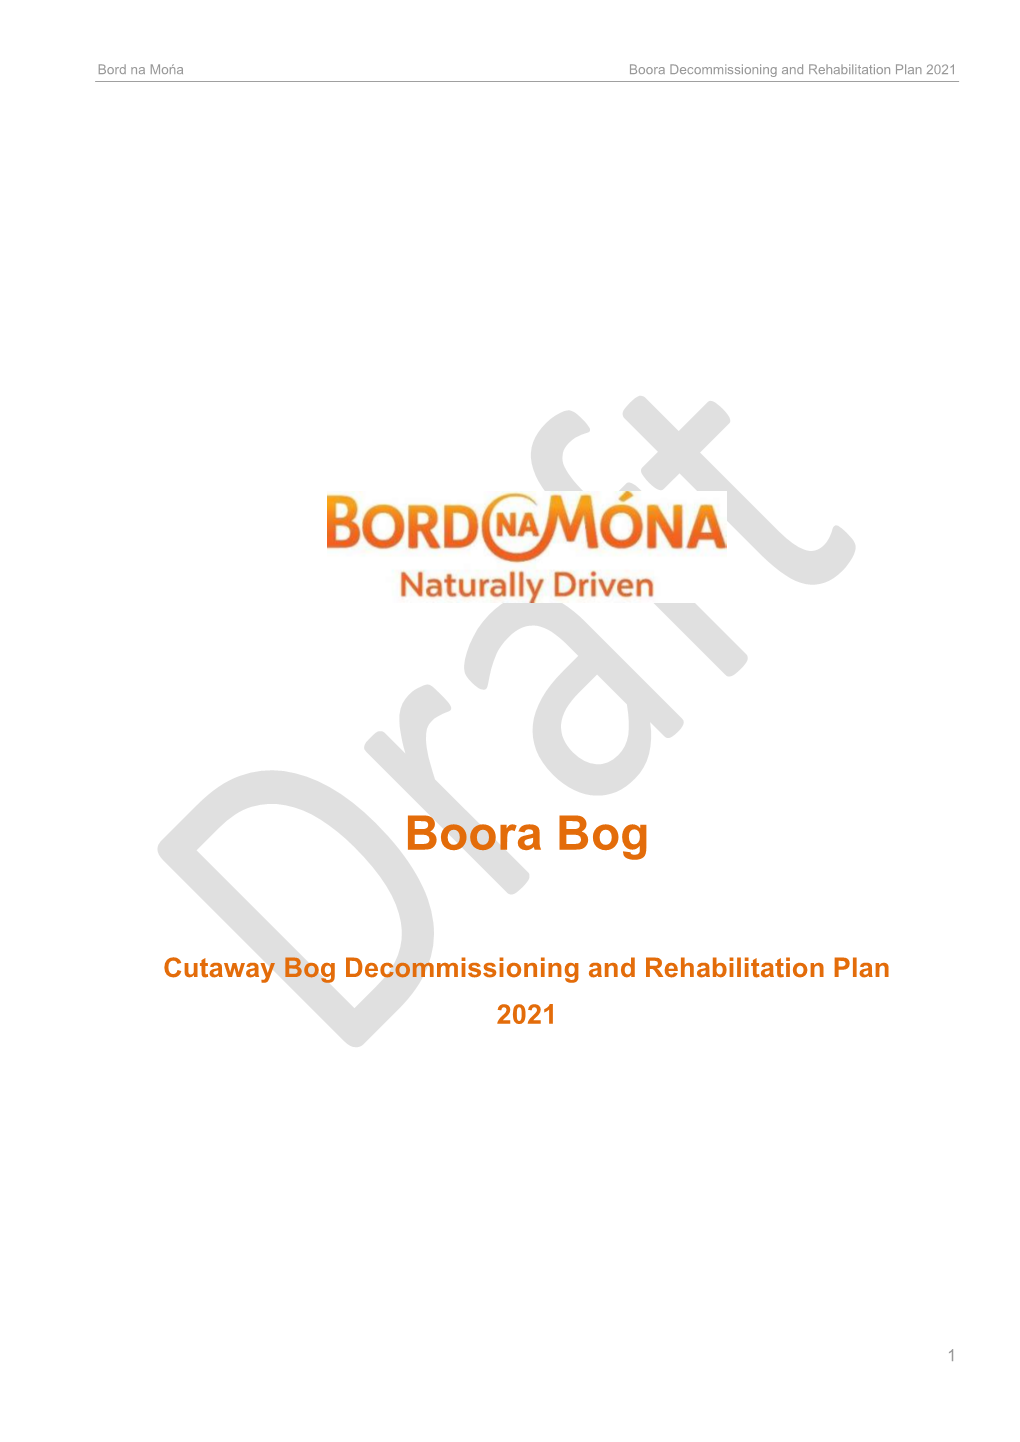 Boora Decommissioning and Rehabilitation Plan 2021